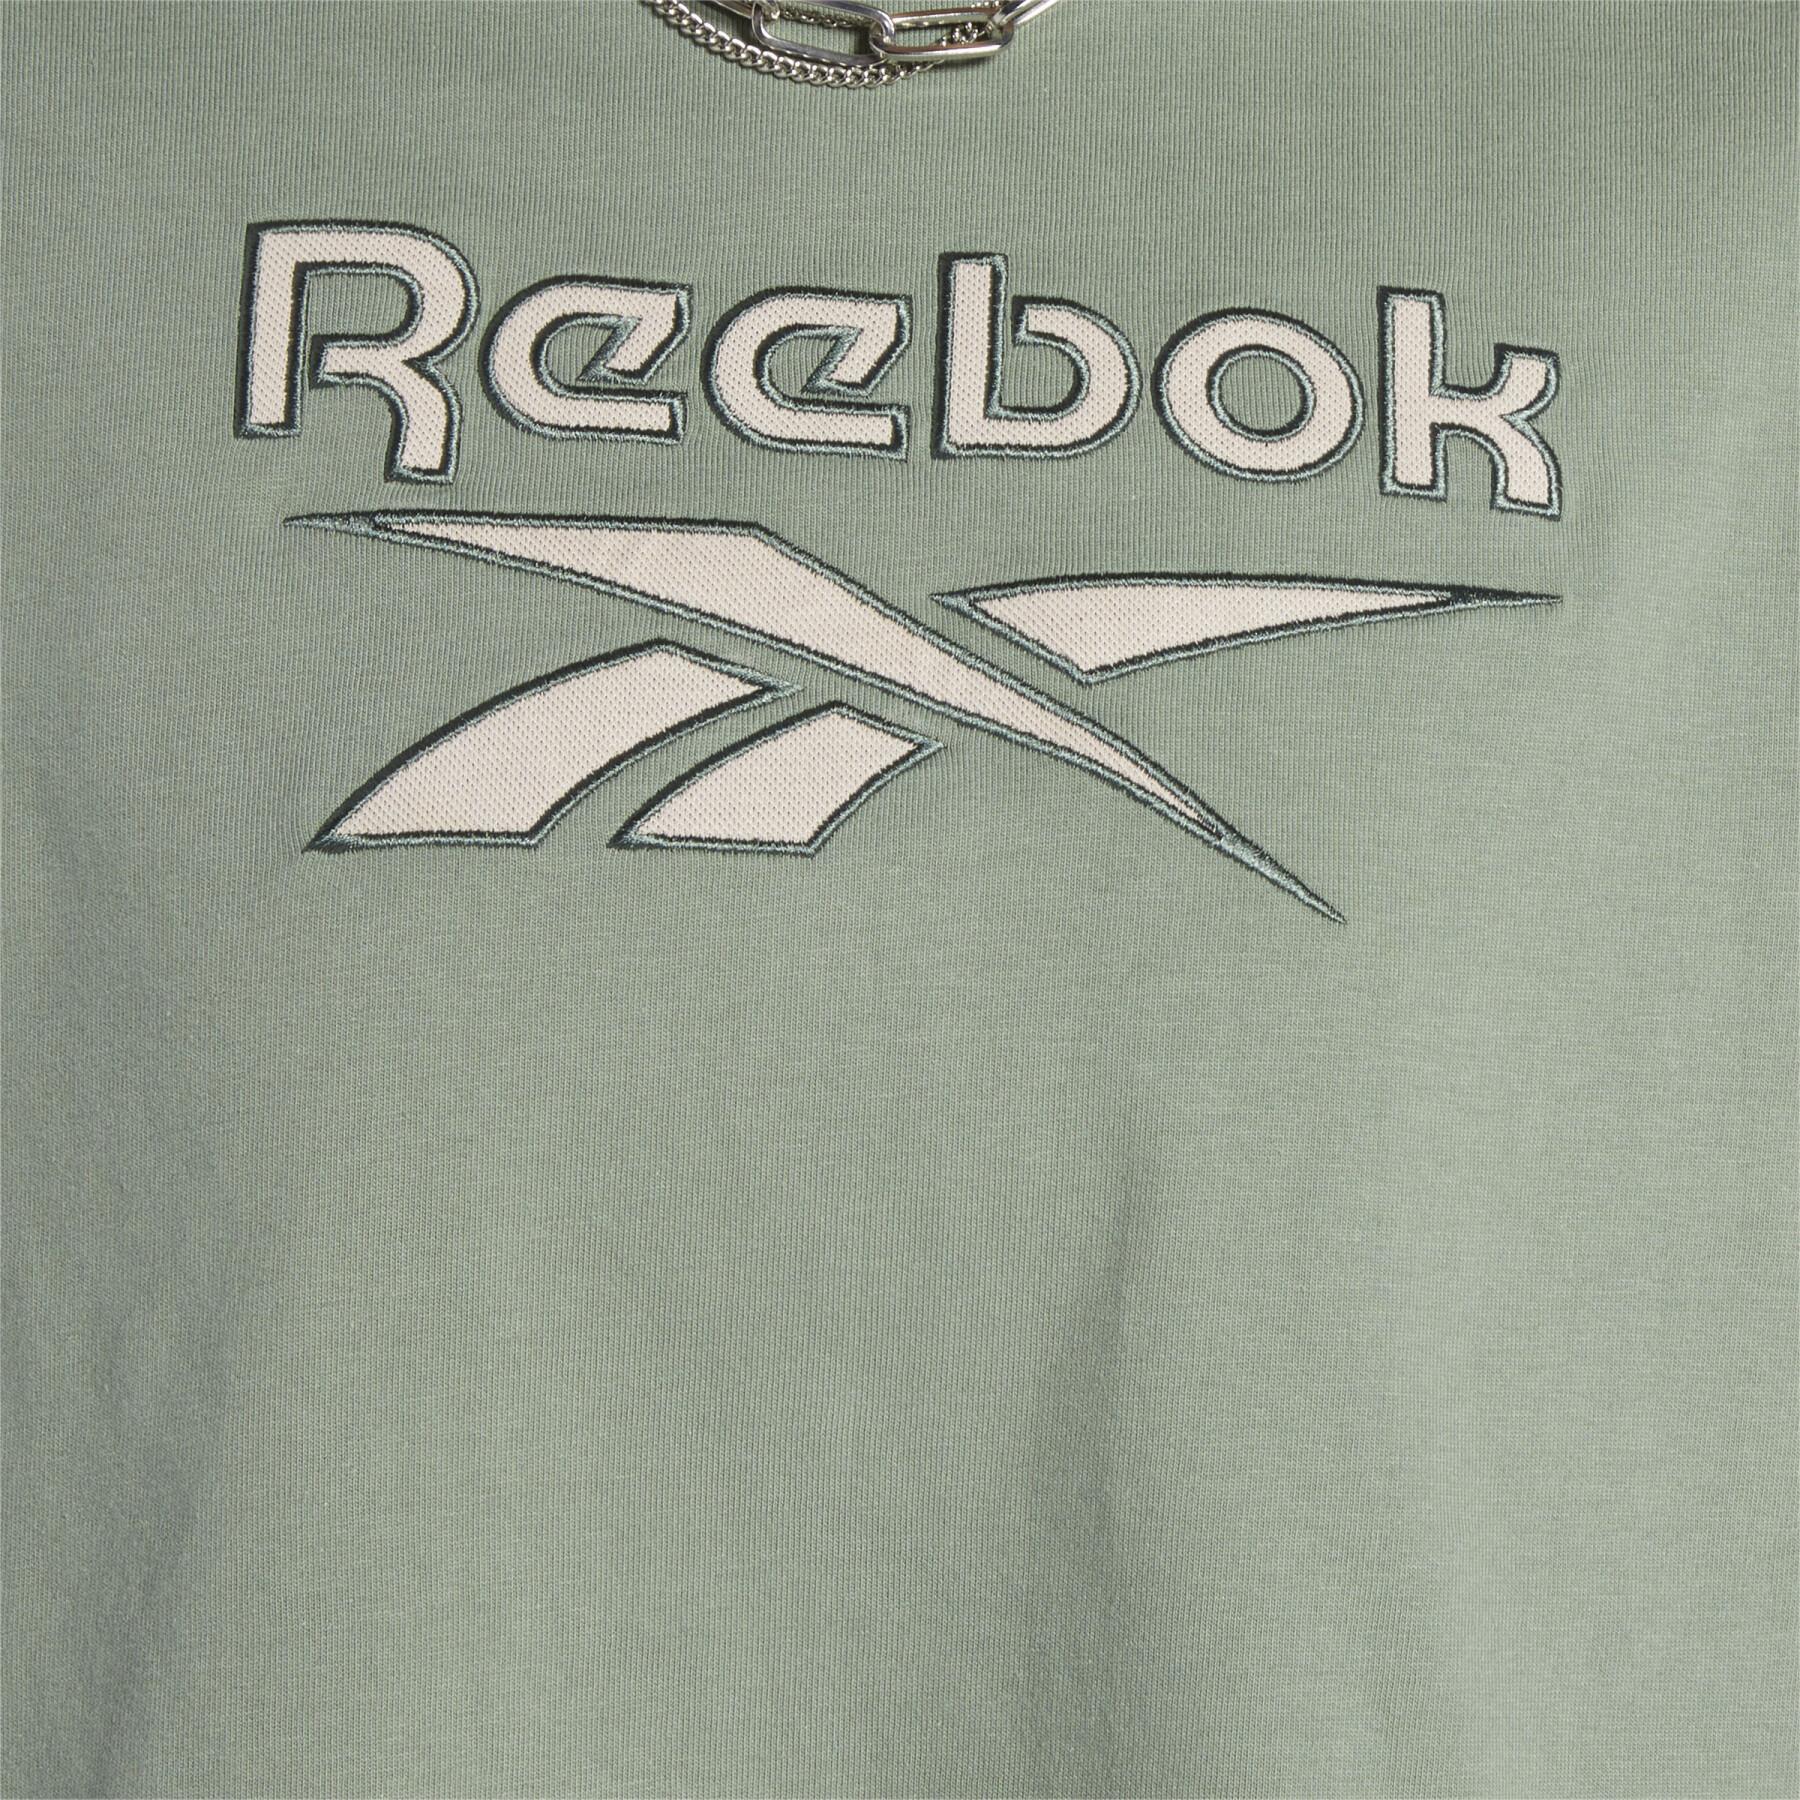 Camiseta crop top de mujer Reebok Classics Big Logo